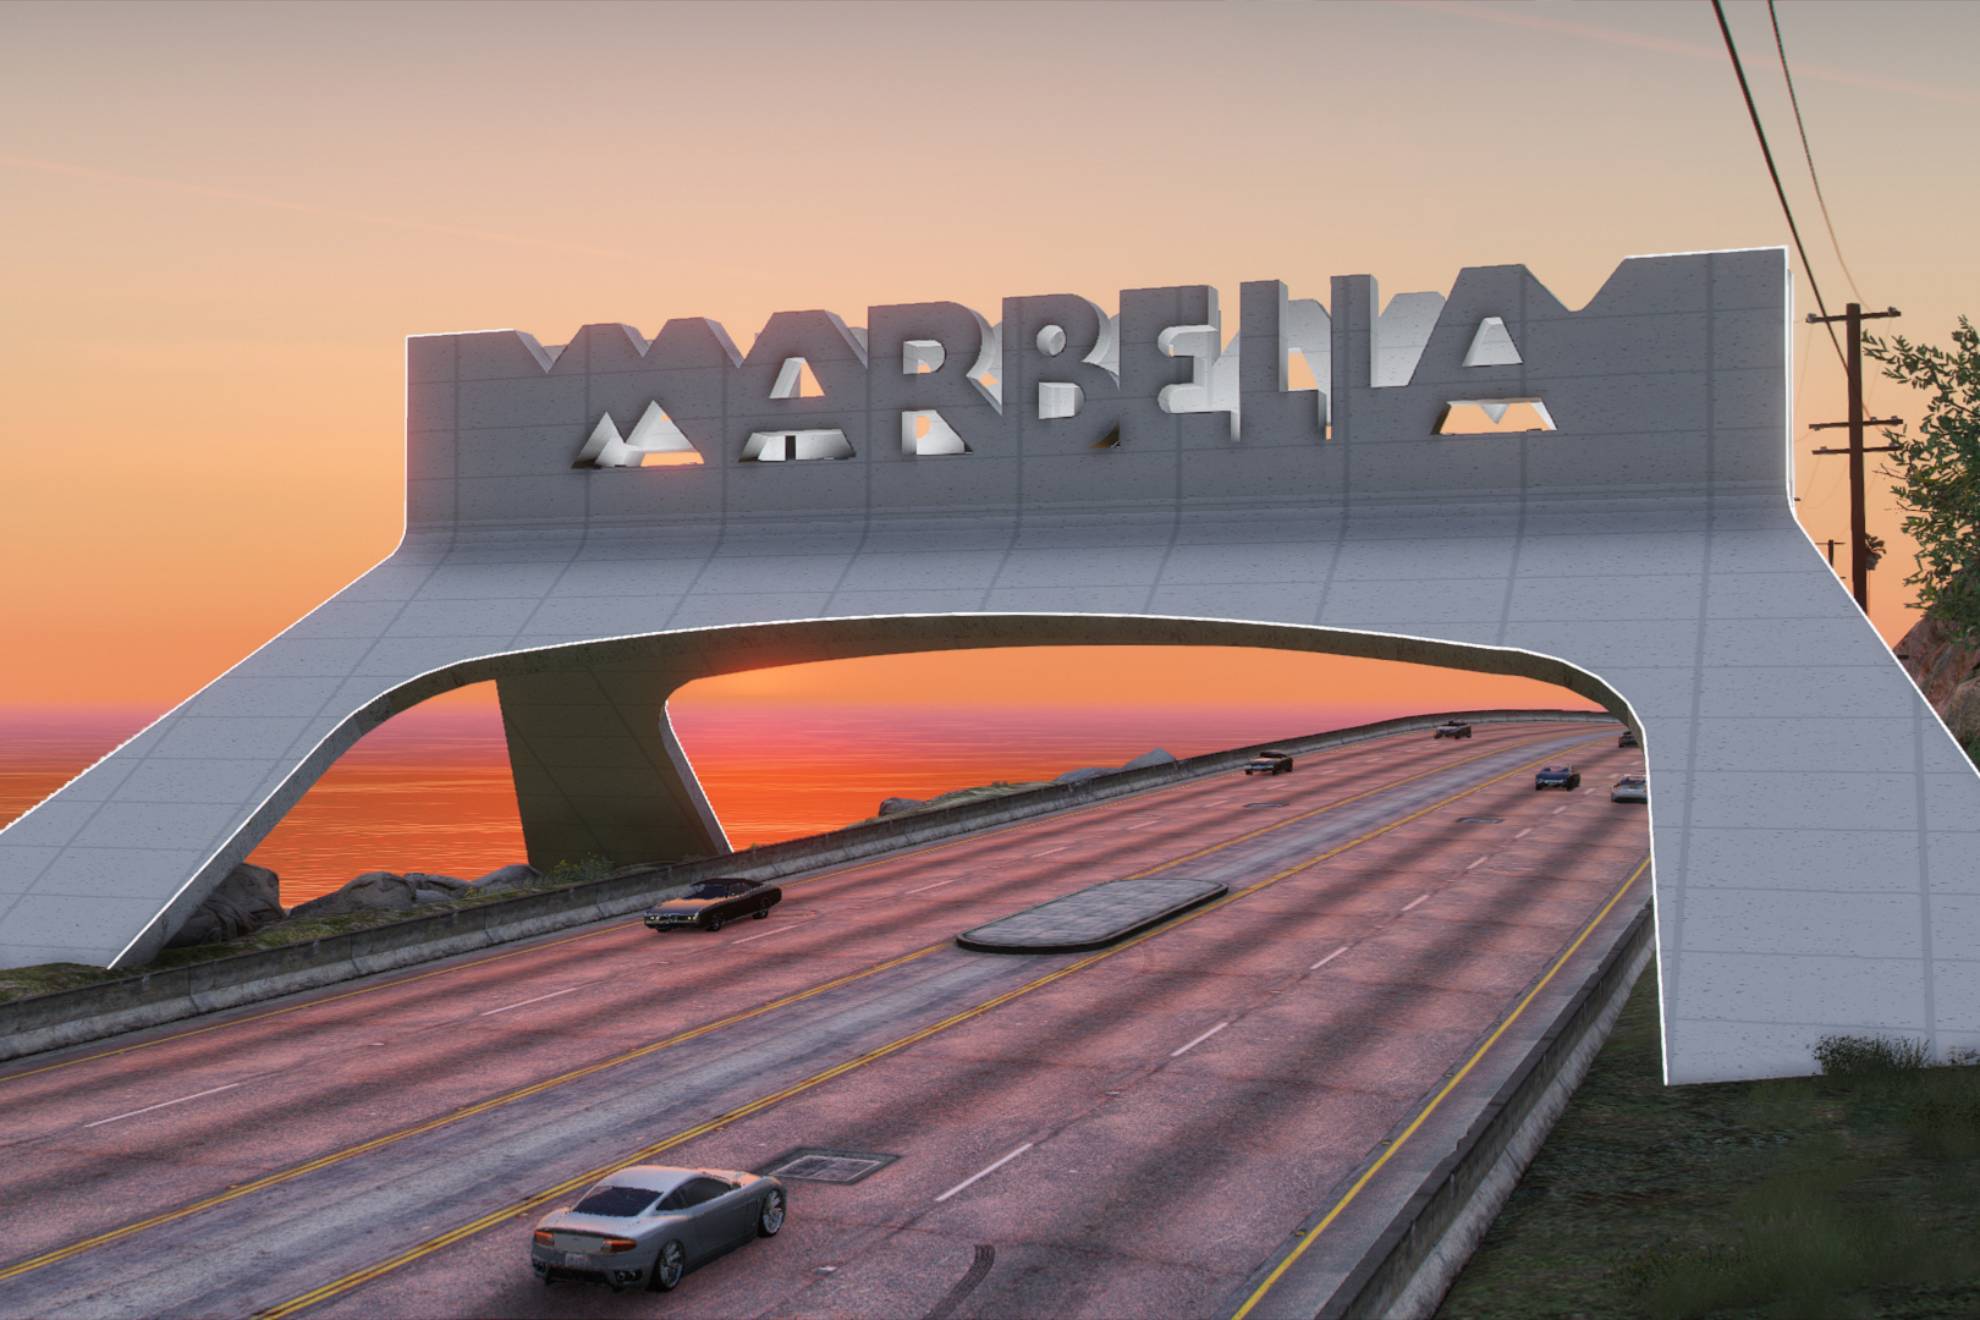 Marbella Vice 2 | Participantes confirmados del famoso GTA Roleplay: AuronPlay, Paul Thin, DjMariio